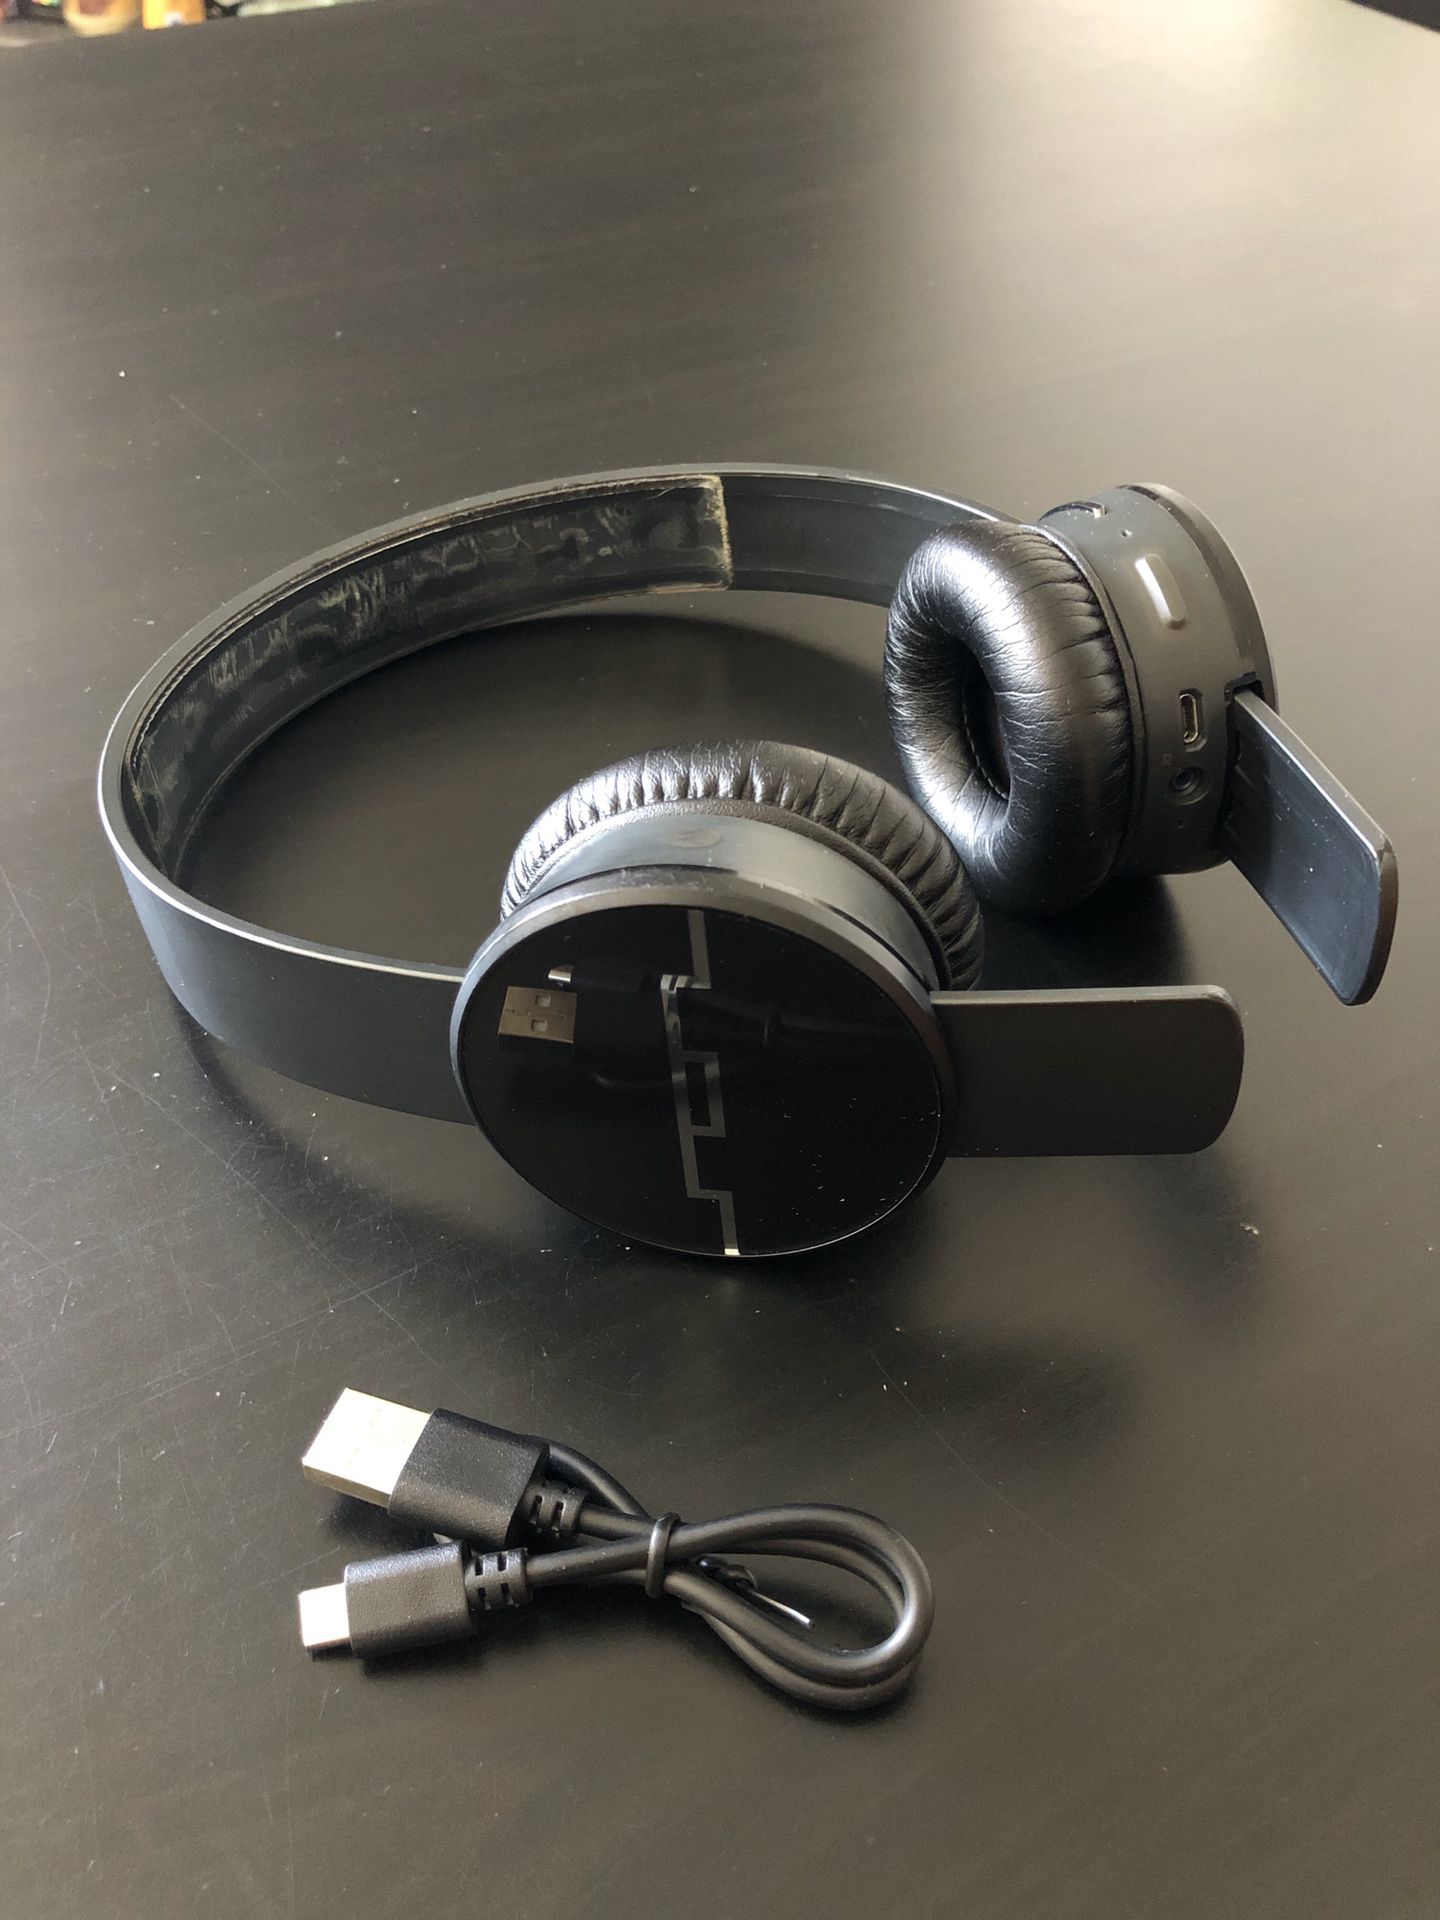 Bluetooth Headphones- Sol Republic Air Tracks